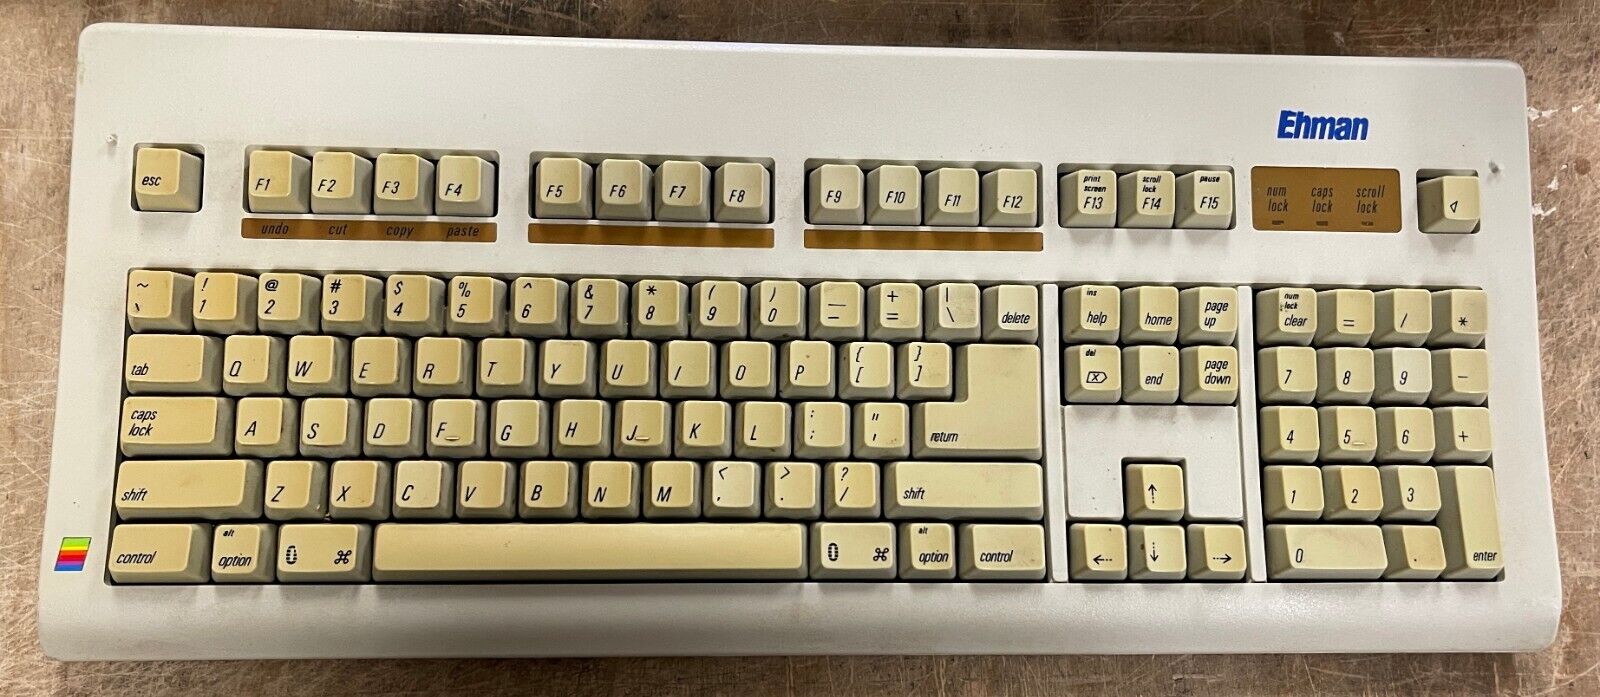 Vintage Ehman ADB105 Apple ADB Keyboard TESTED